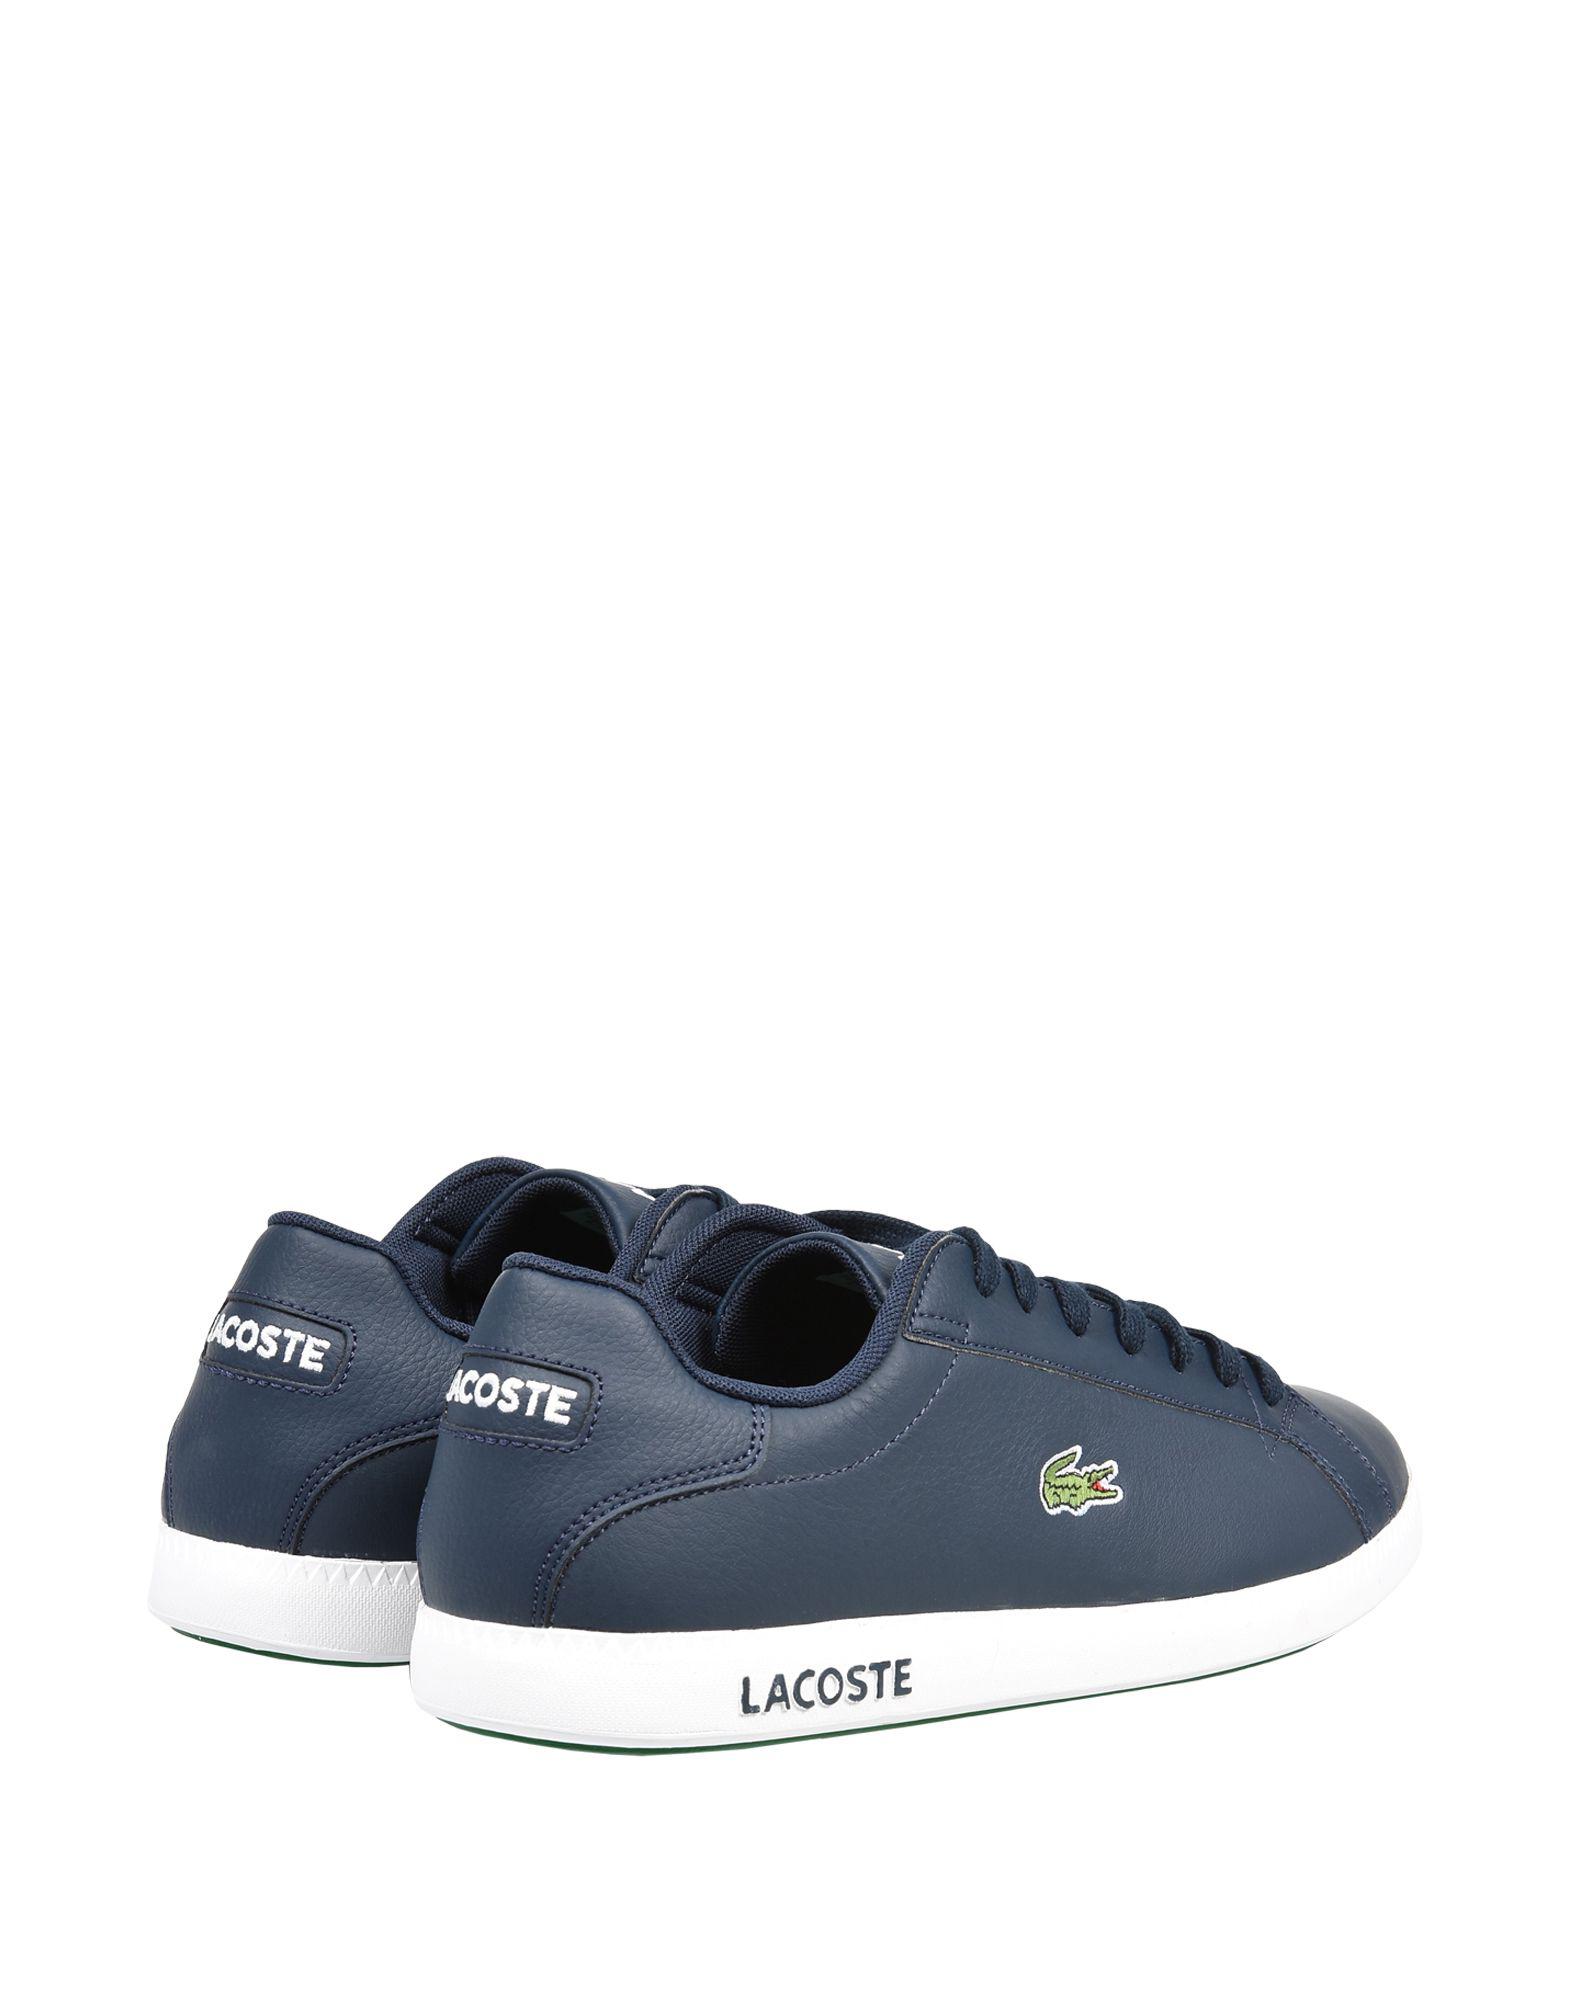 Lacoste Leather Low-tops & Sneakers in Dark Blue (Blue) for Men - Lyst